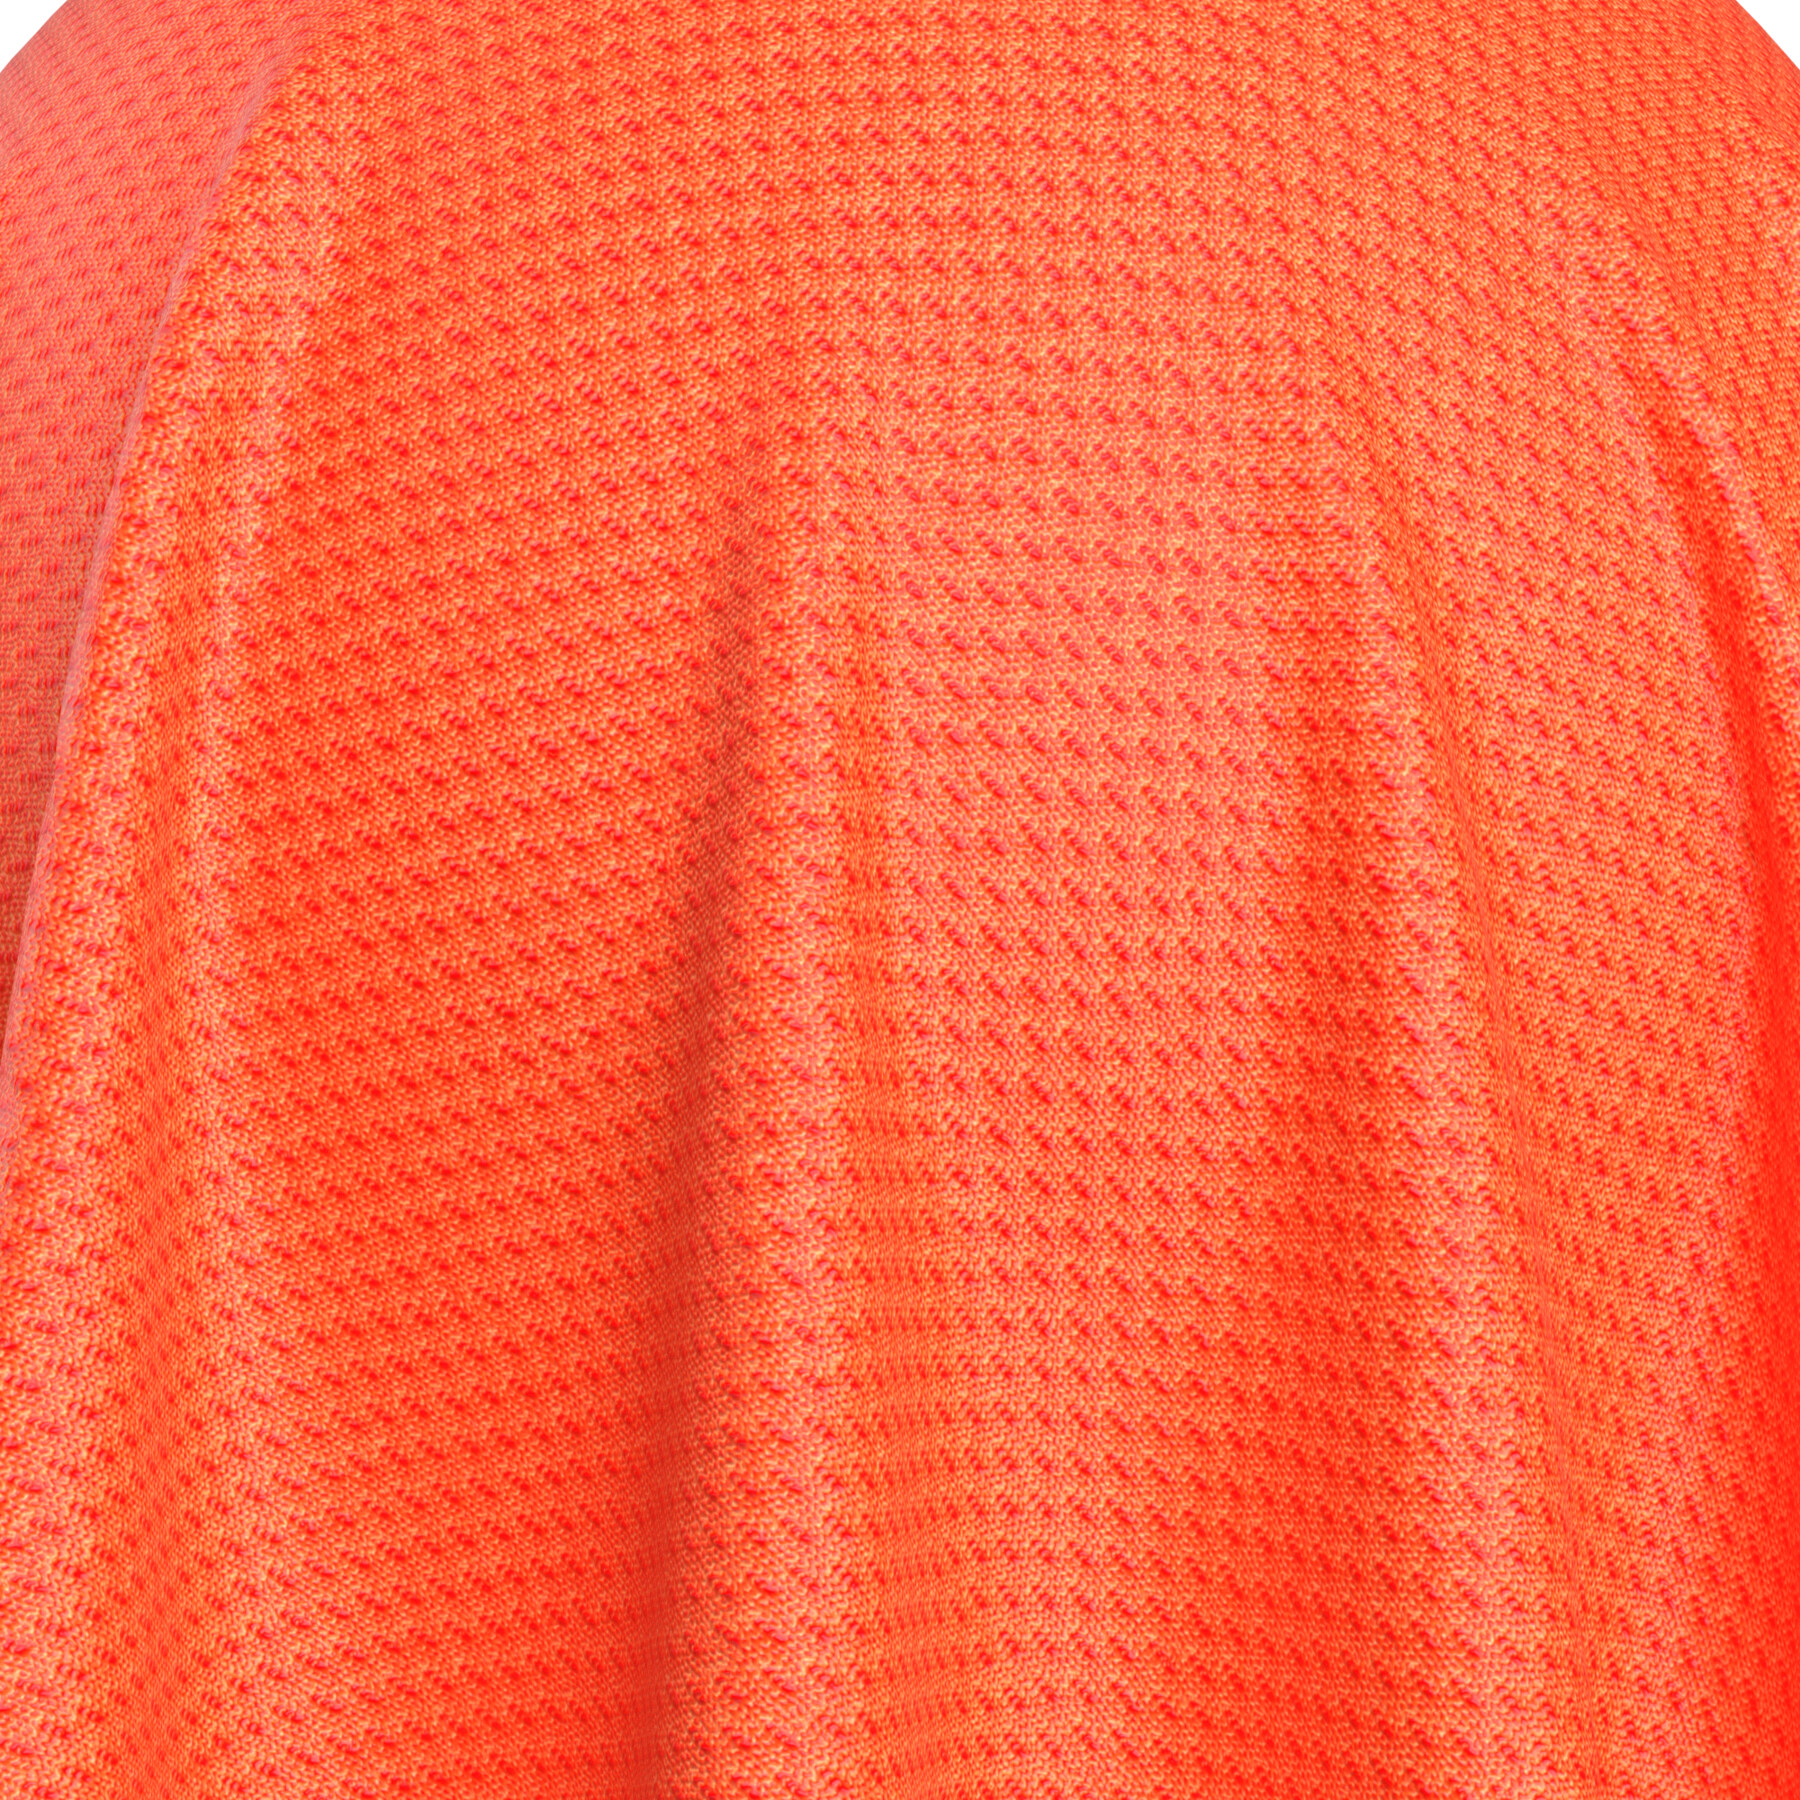 ArtStation - Knit Birdseye Mesh Exotic Orange Colored Fabric | Game Assets